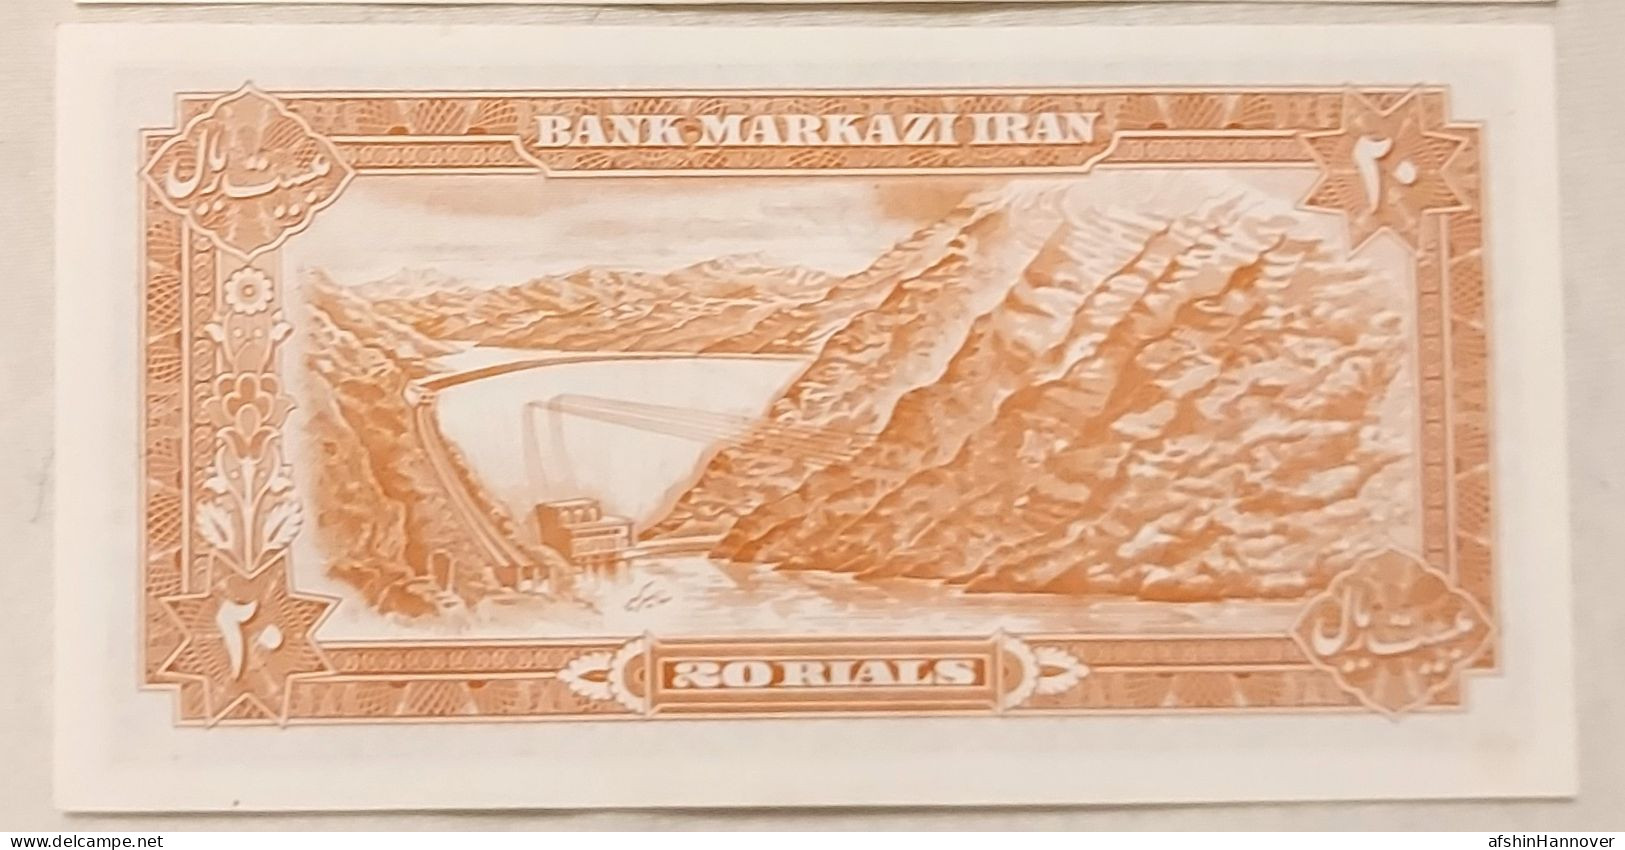 Iran Mohammad Reza 3x Shah  20 Rials   Rare UNC (consecutive Serial Numbers)   Persian 1976 - Iran